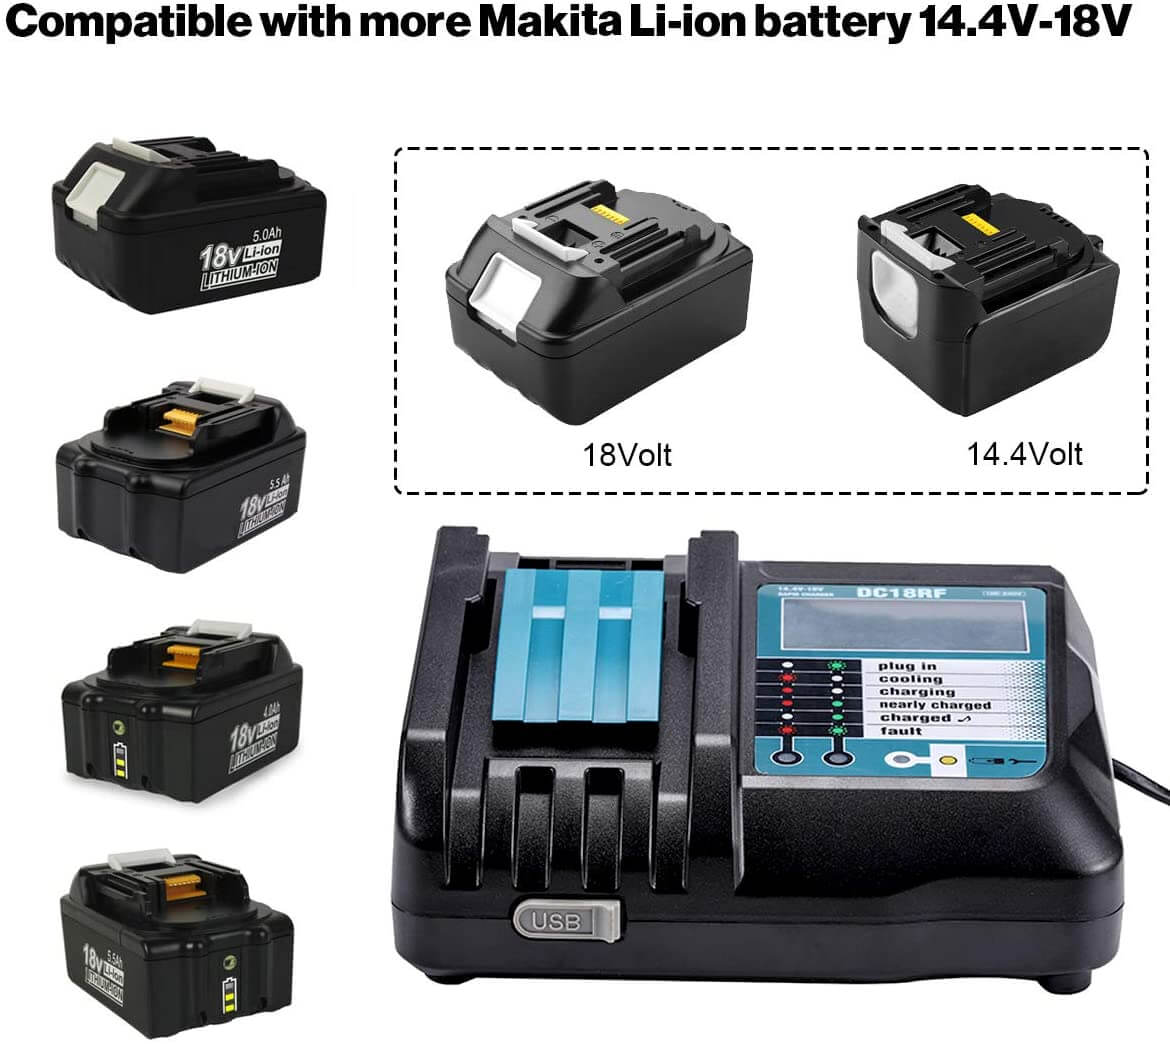 2BL1860 6.5A+DC18RF 3.5A Li-Ion Ersatz Ladegerät für Makita 14.4V-18V akku Ladegeräte - Dasbatteries